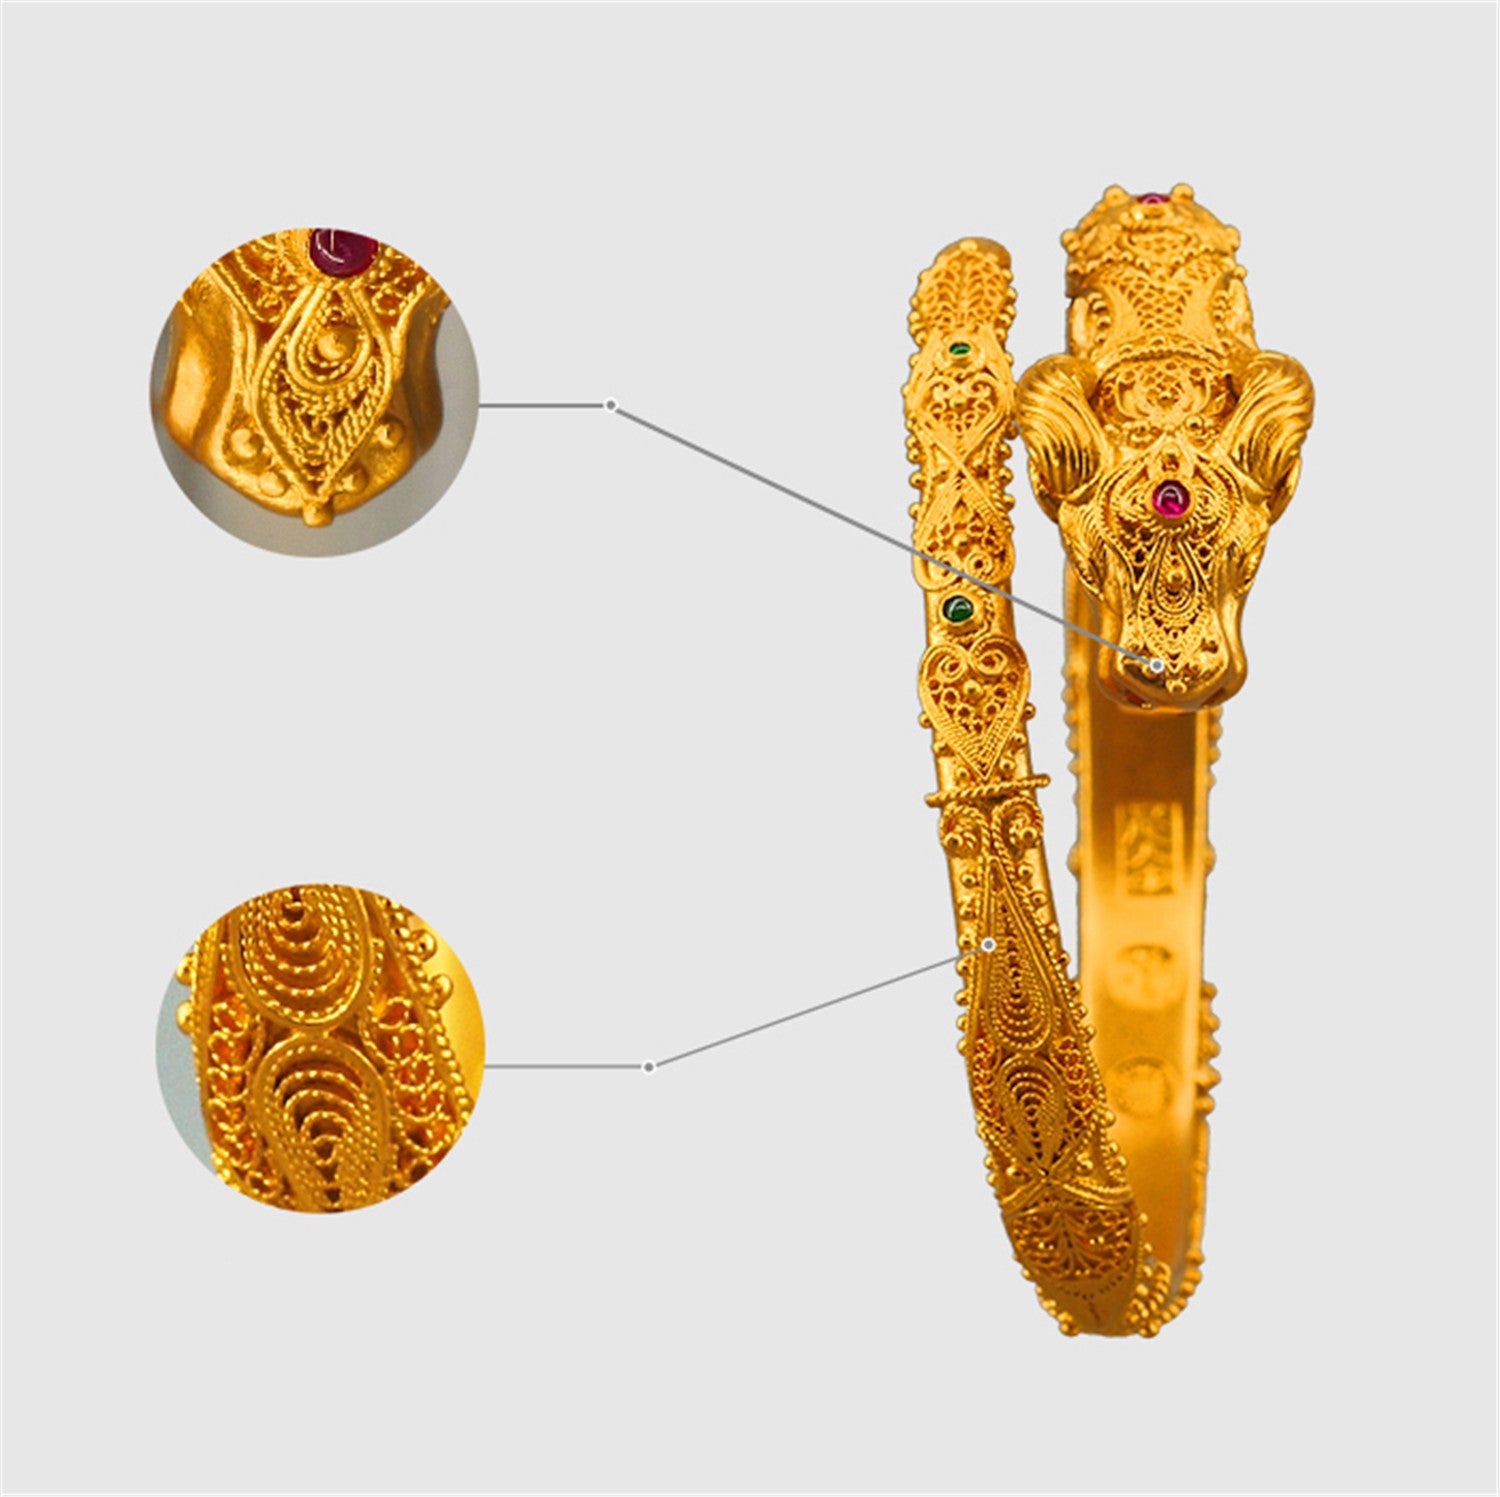 EVECOCO Full Gold Bracelet,Dragon Pattern,Hand Forging,Micro Relief Filigree,Gemstone,115g